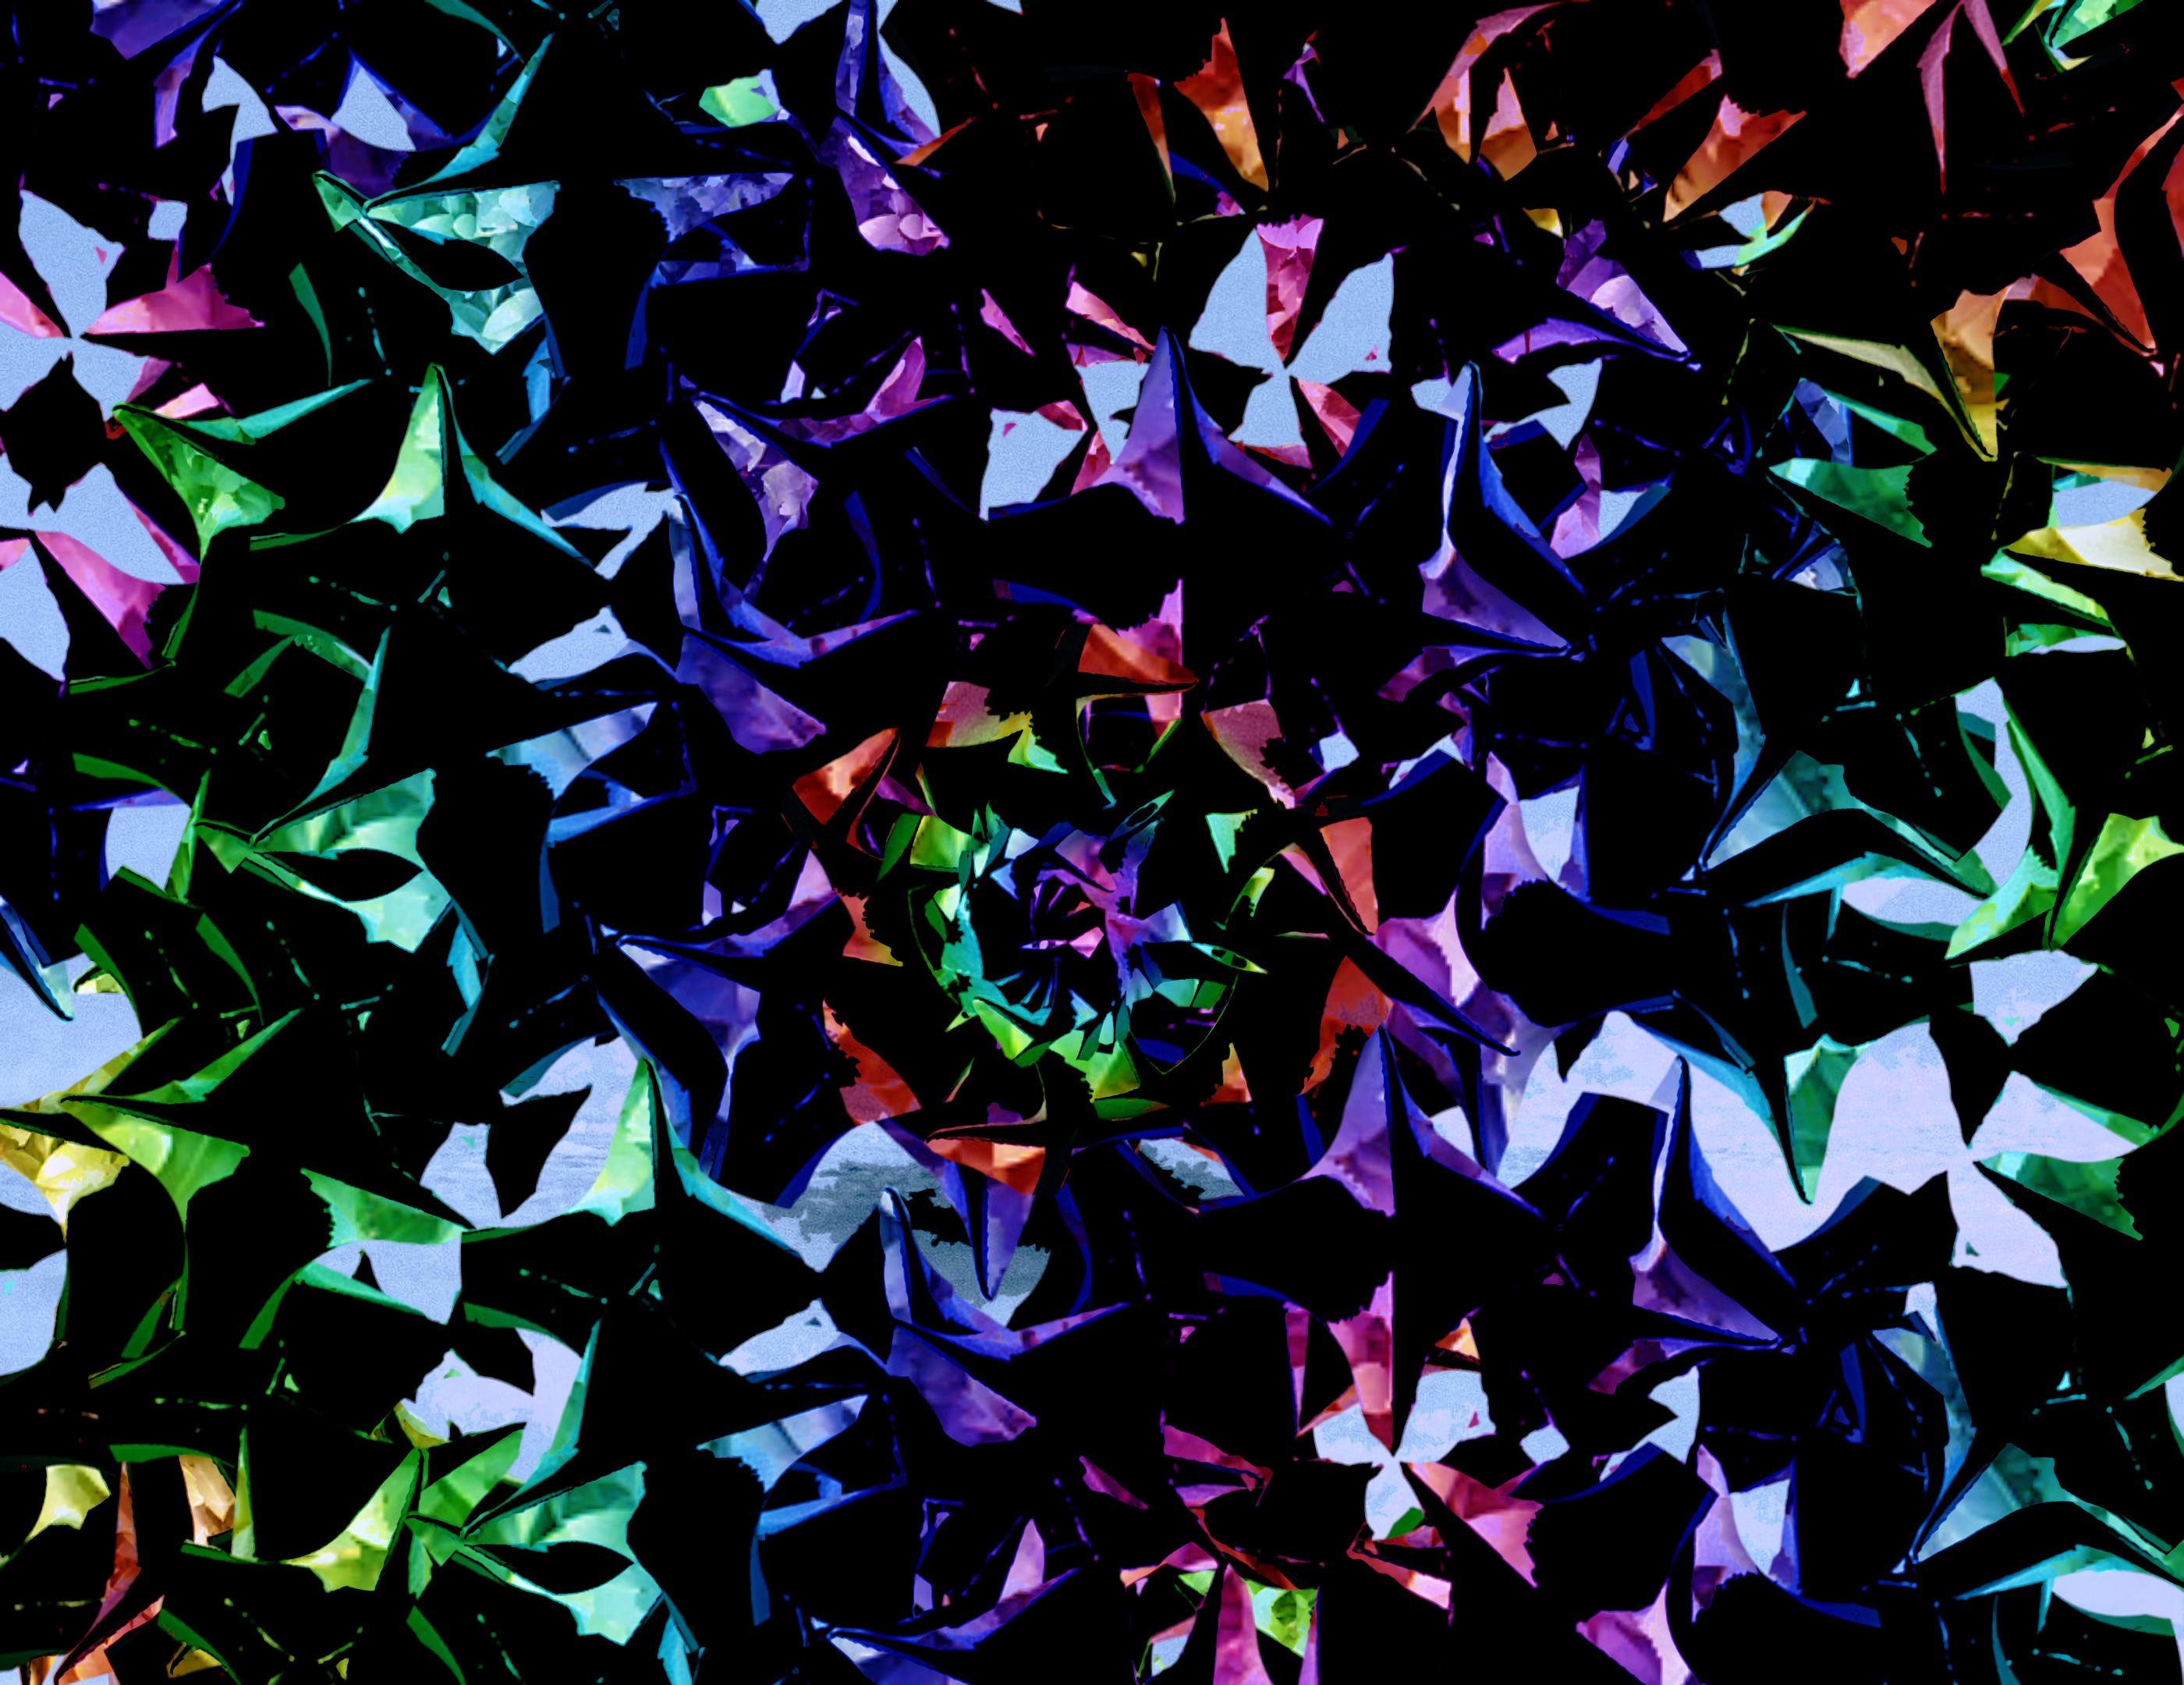 motley, abstract, multicolored, kaleidoscope, fragments